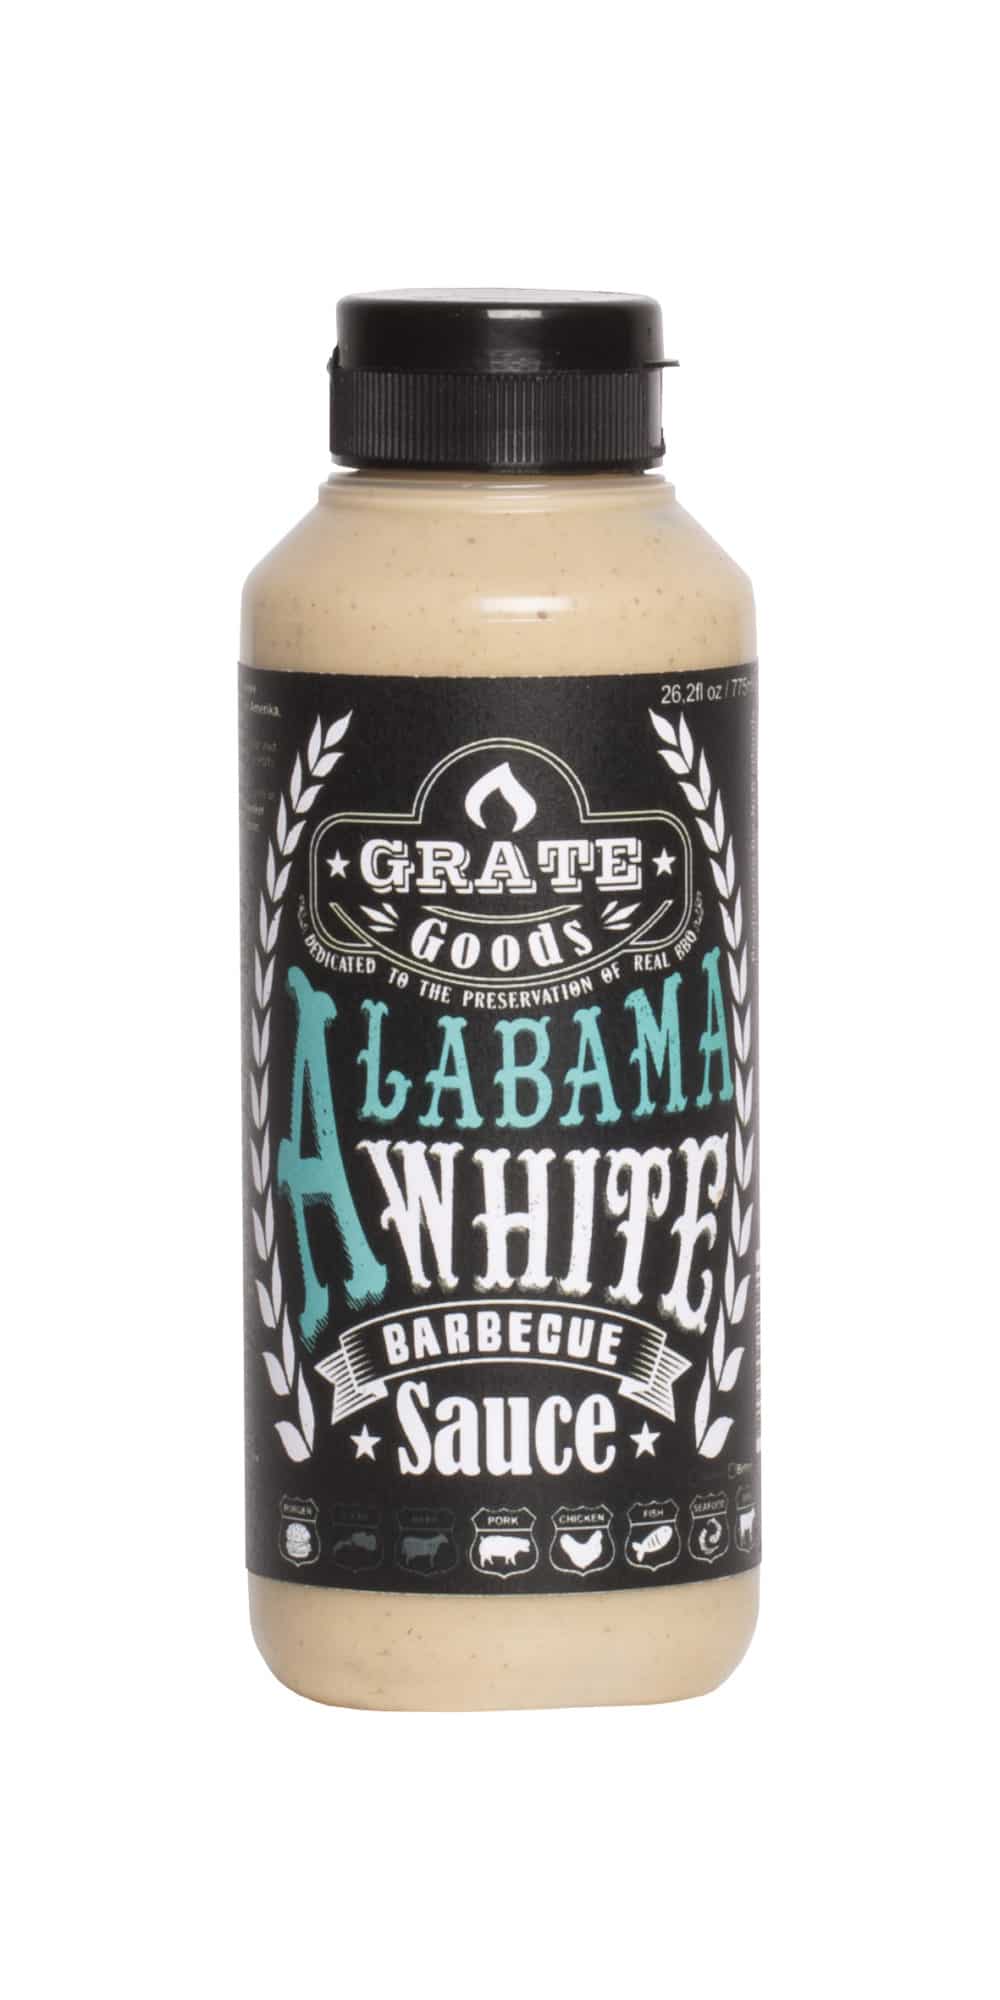 Alabama white barbecue sauce